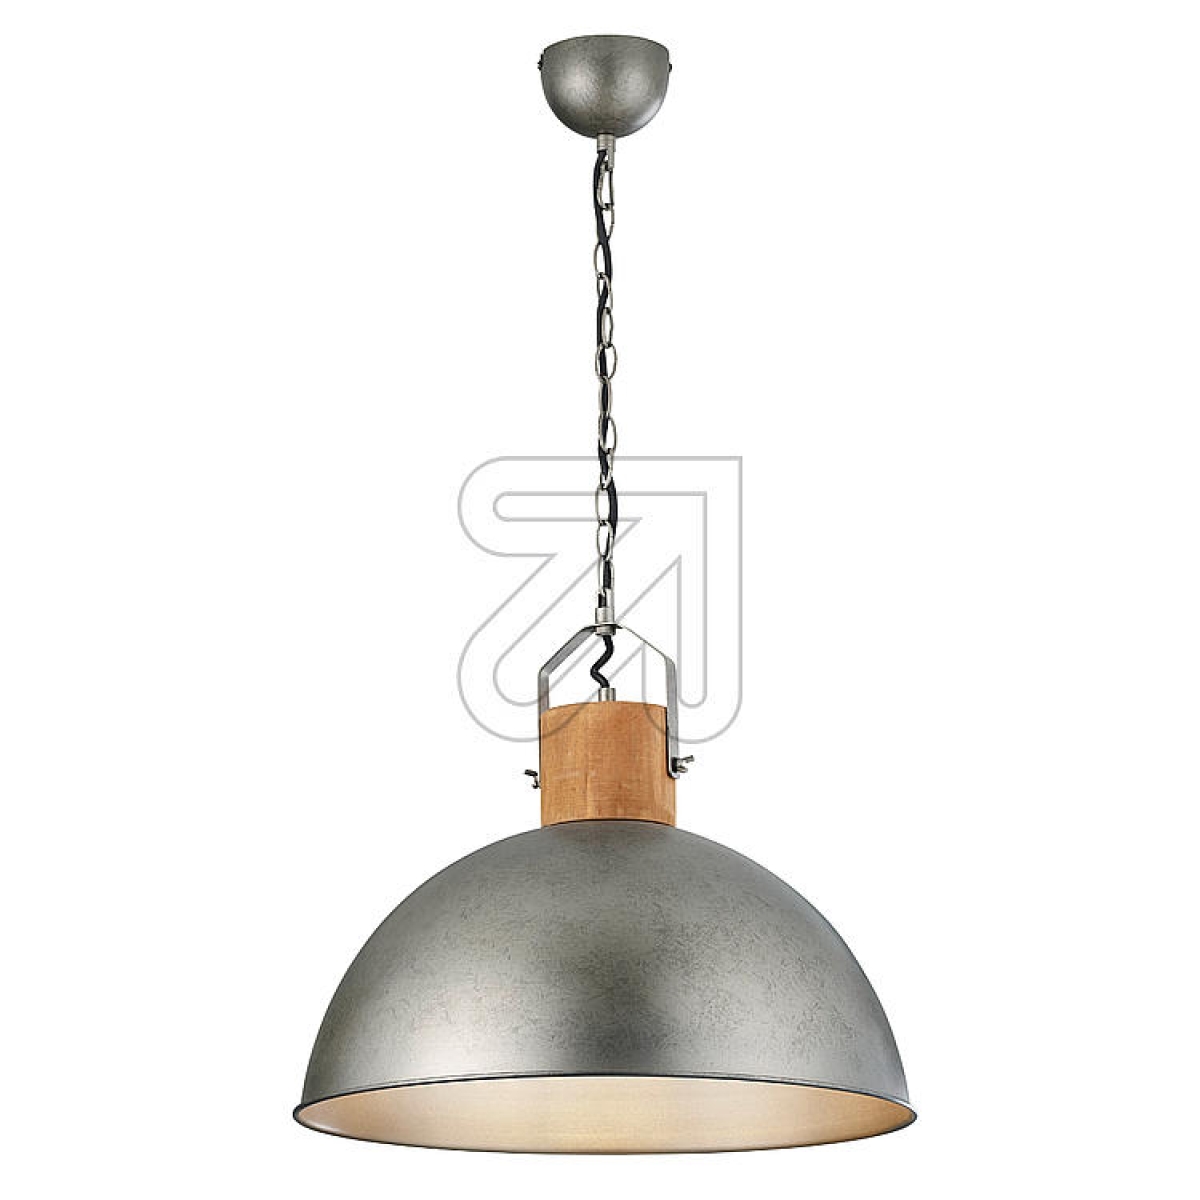 TRIOPendant lamp antique nickel Delhi 303400167Article-No: 632190